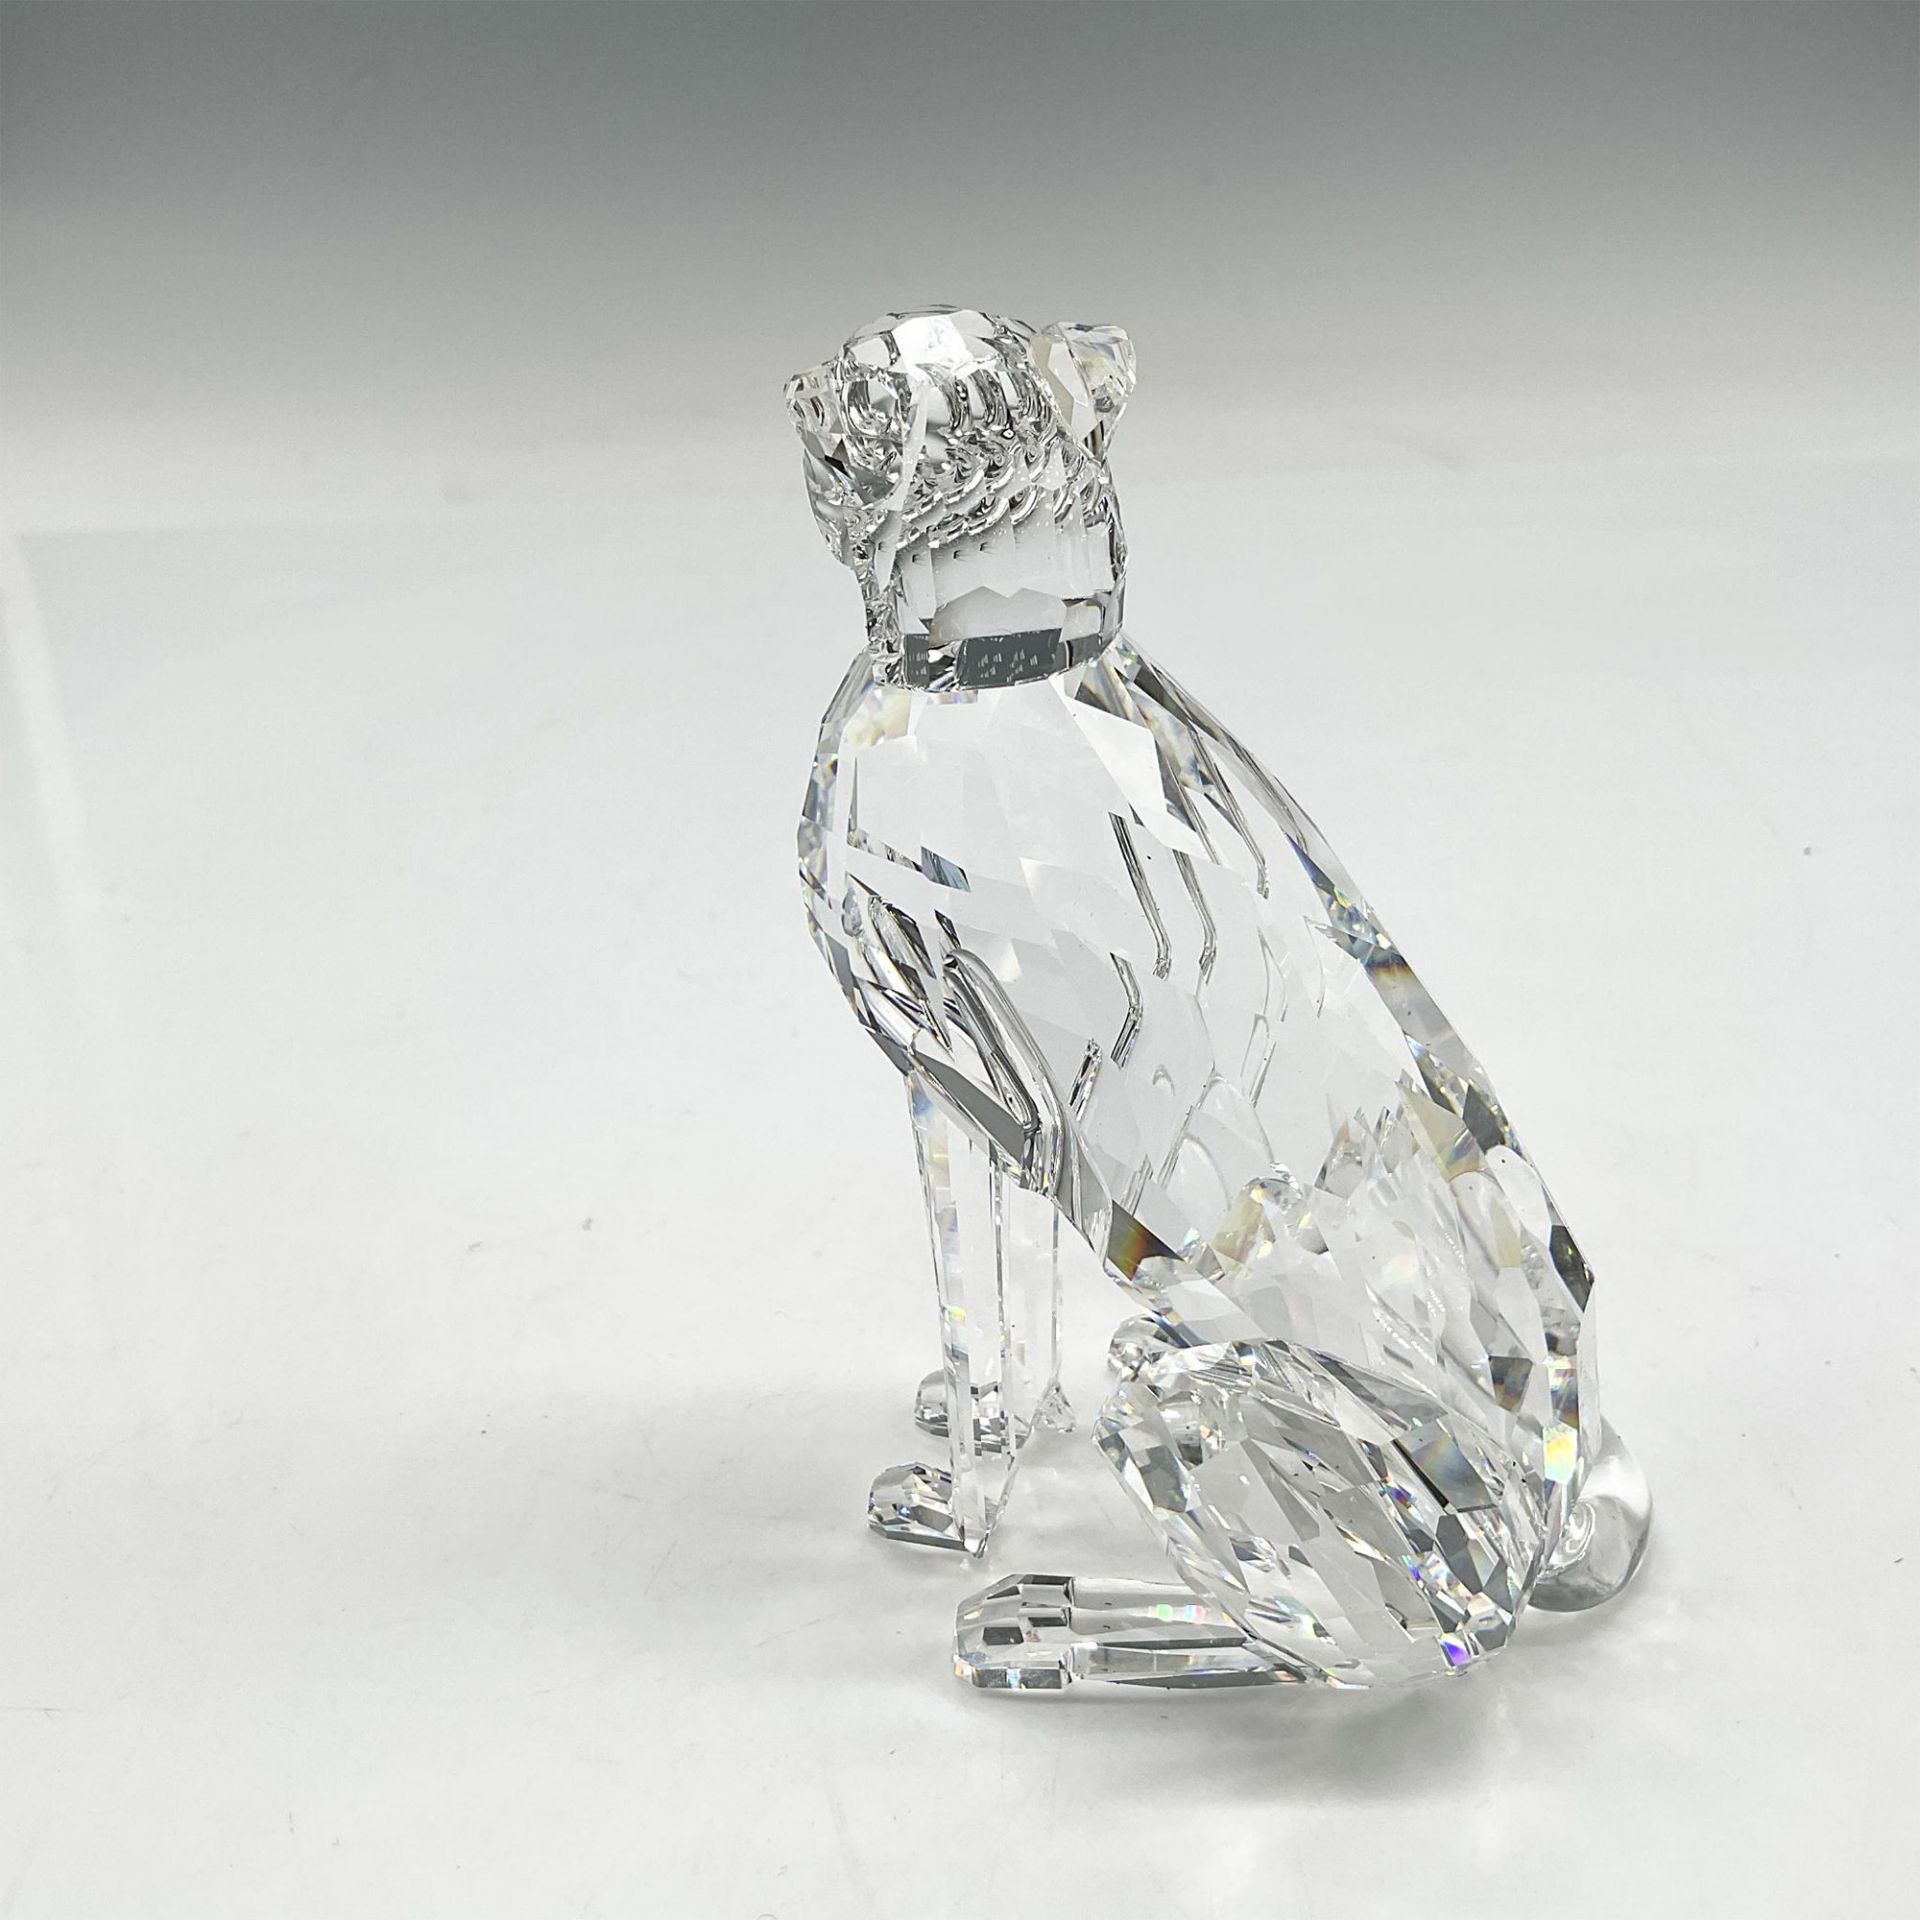 Swarovski Silver Crystal Figurine, Cheetah - Image 2 of 4